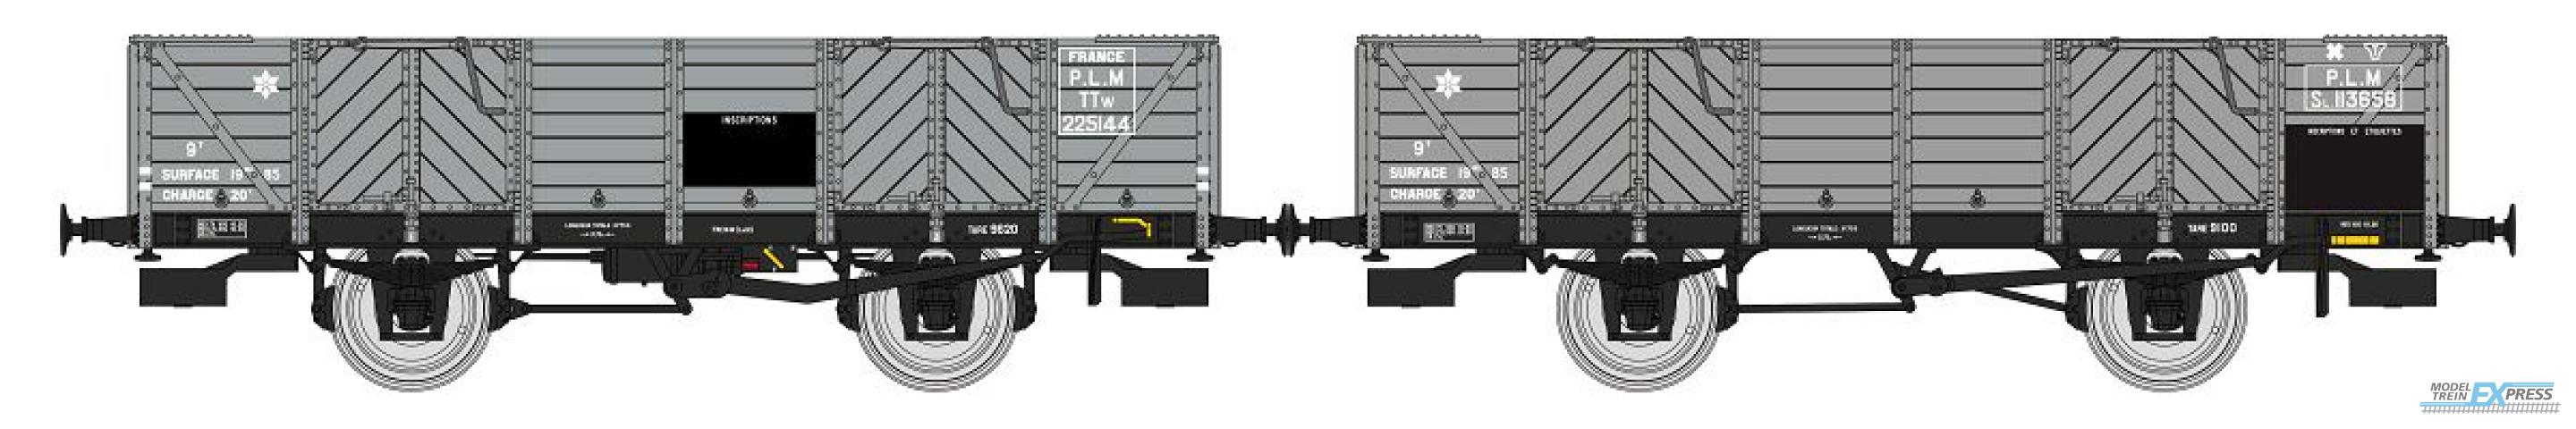 REE models WB-811 Set of 2 PLM Gondola 4 doors, wood, grey, TTw 225144 et SL 113658 PLM Era II